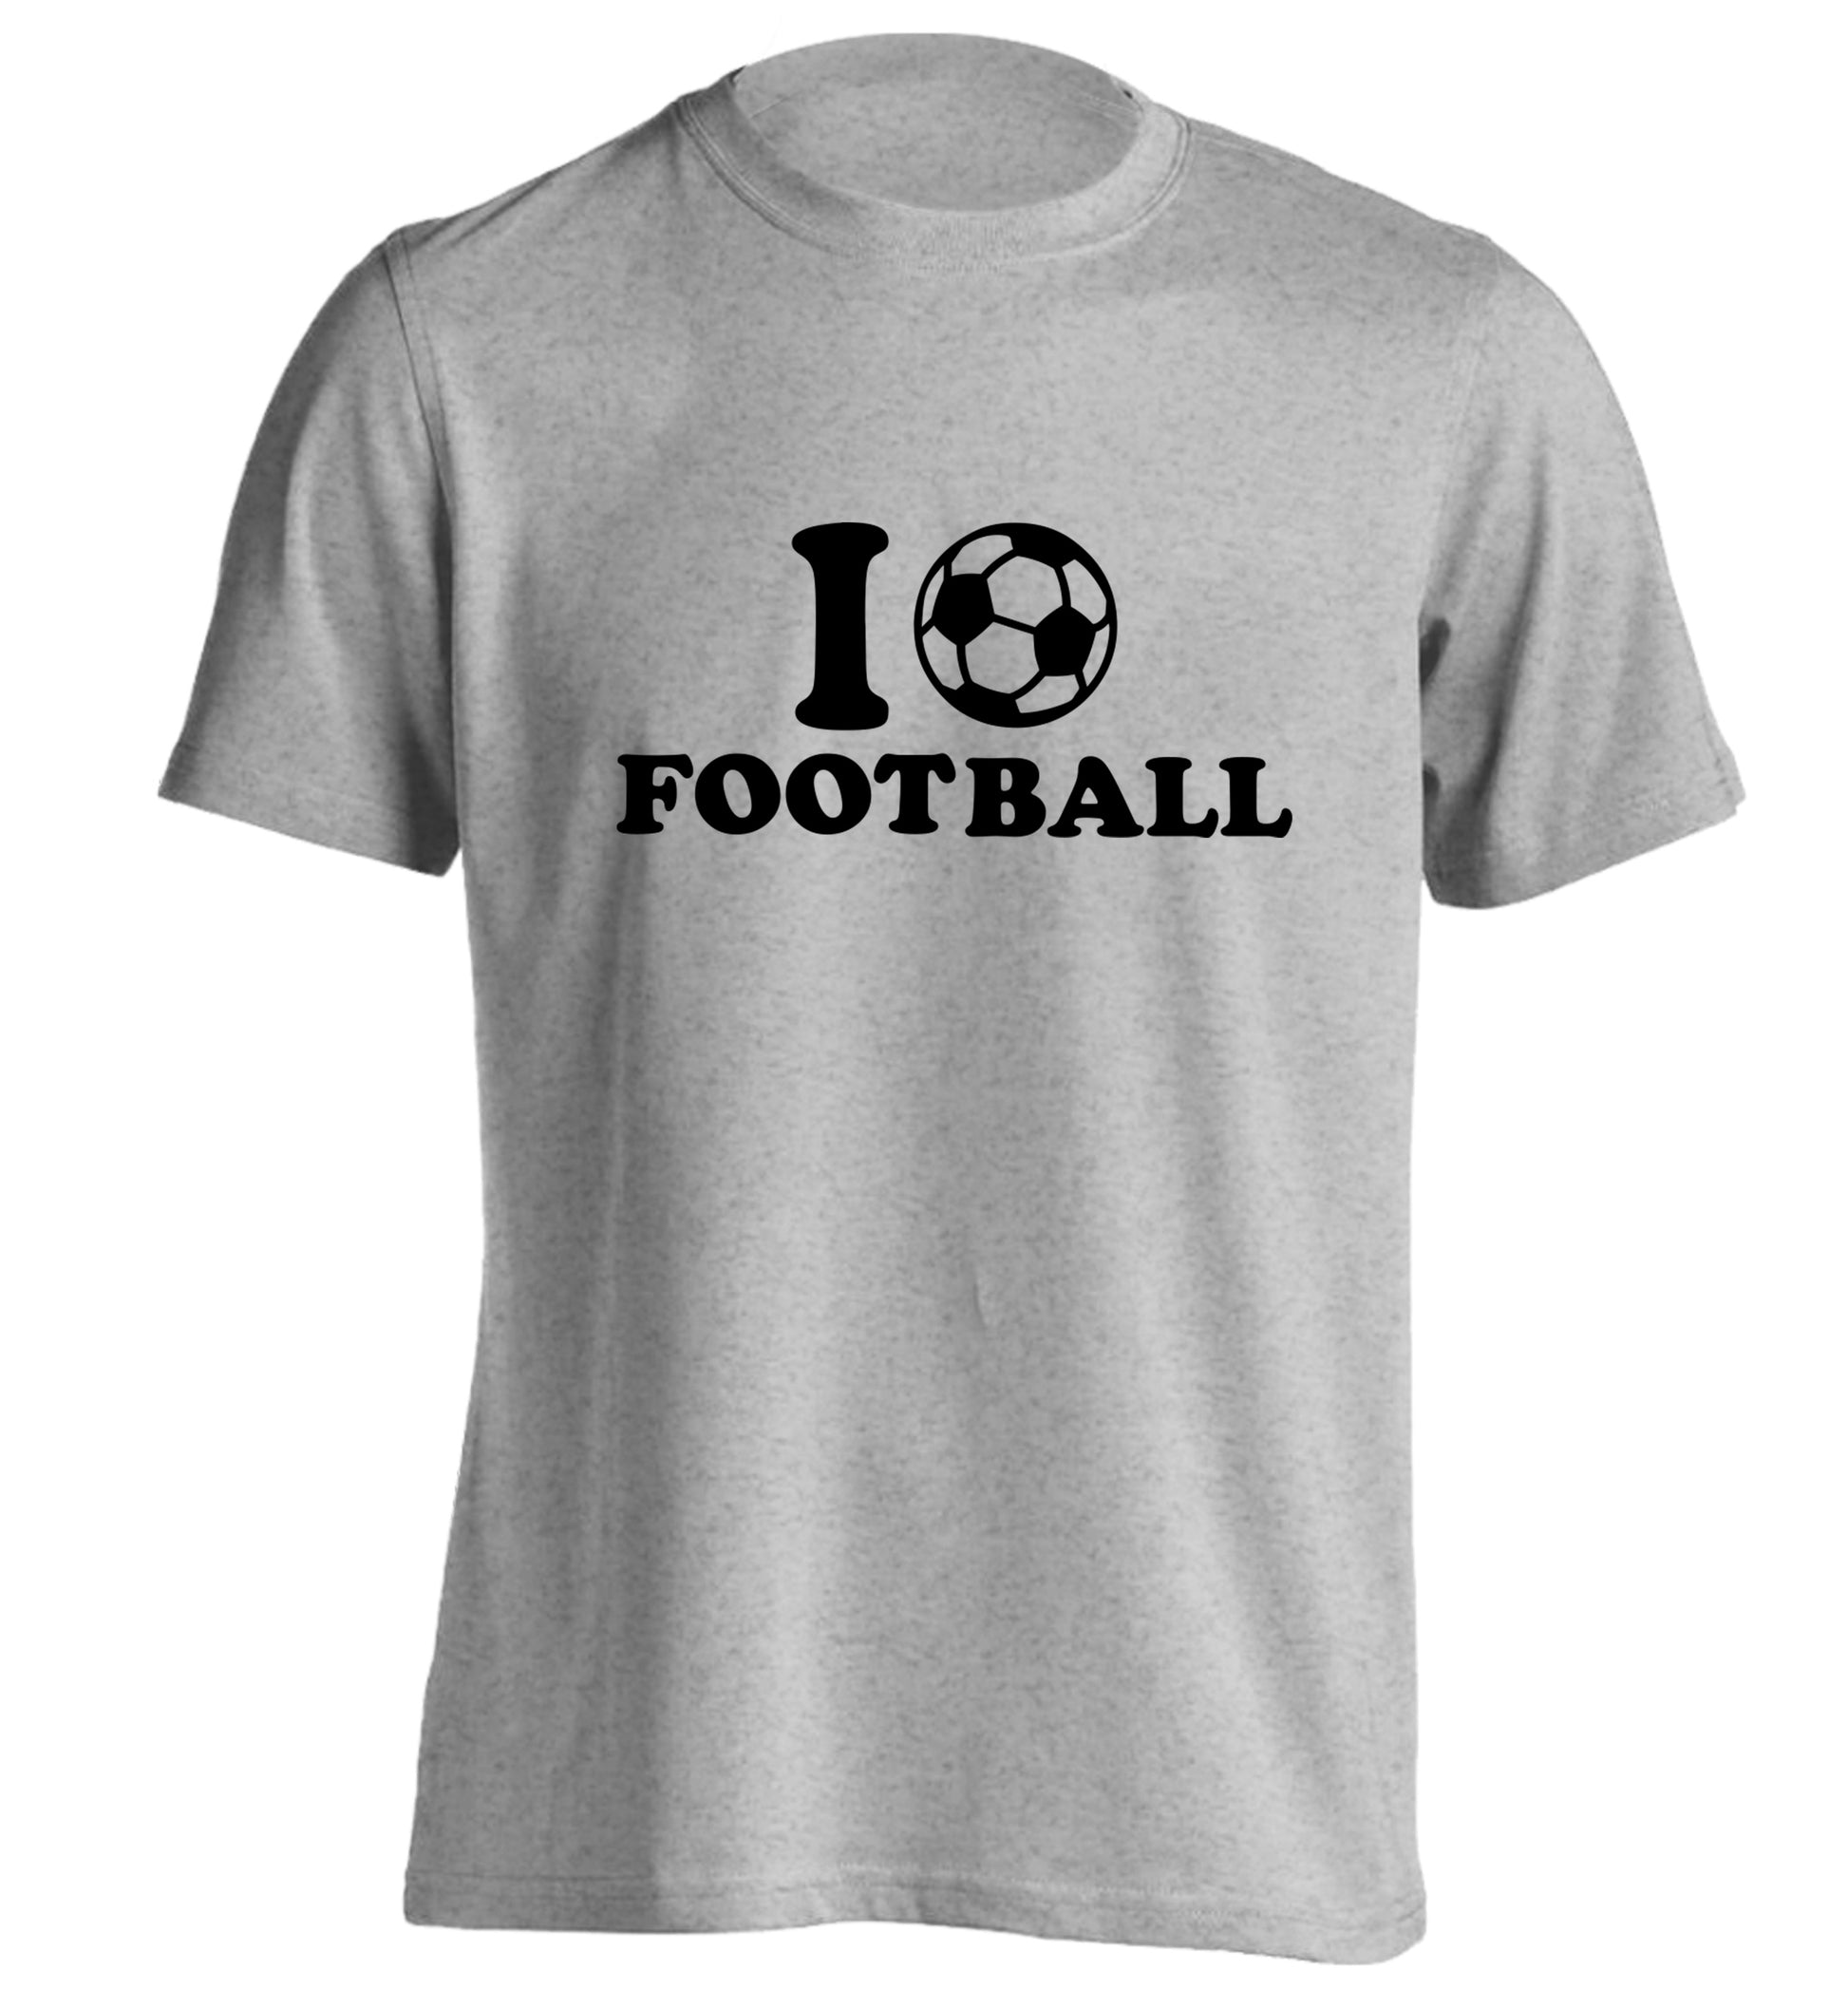 I love football adults unisexgrey Tshirt 2XL